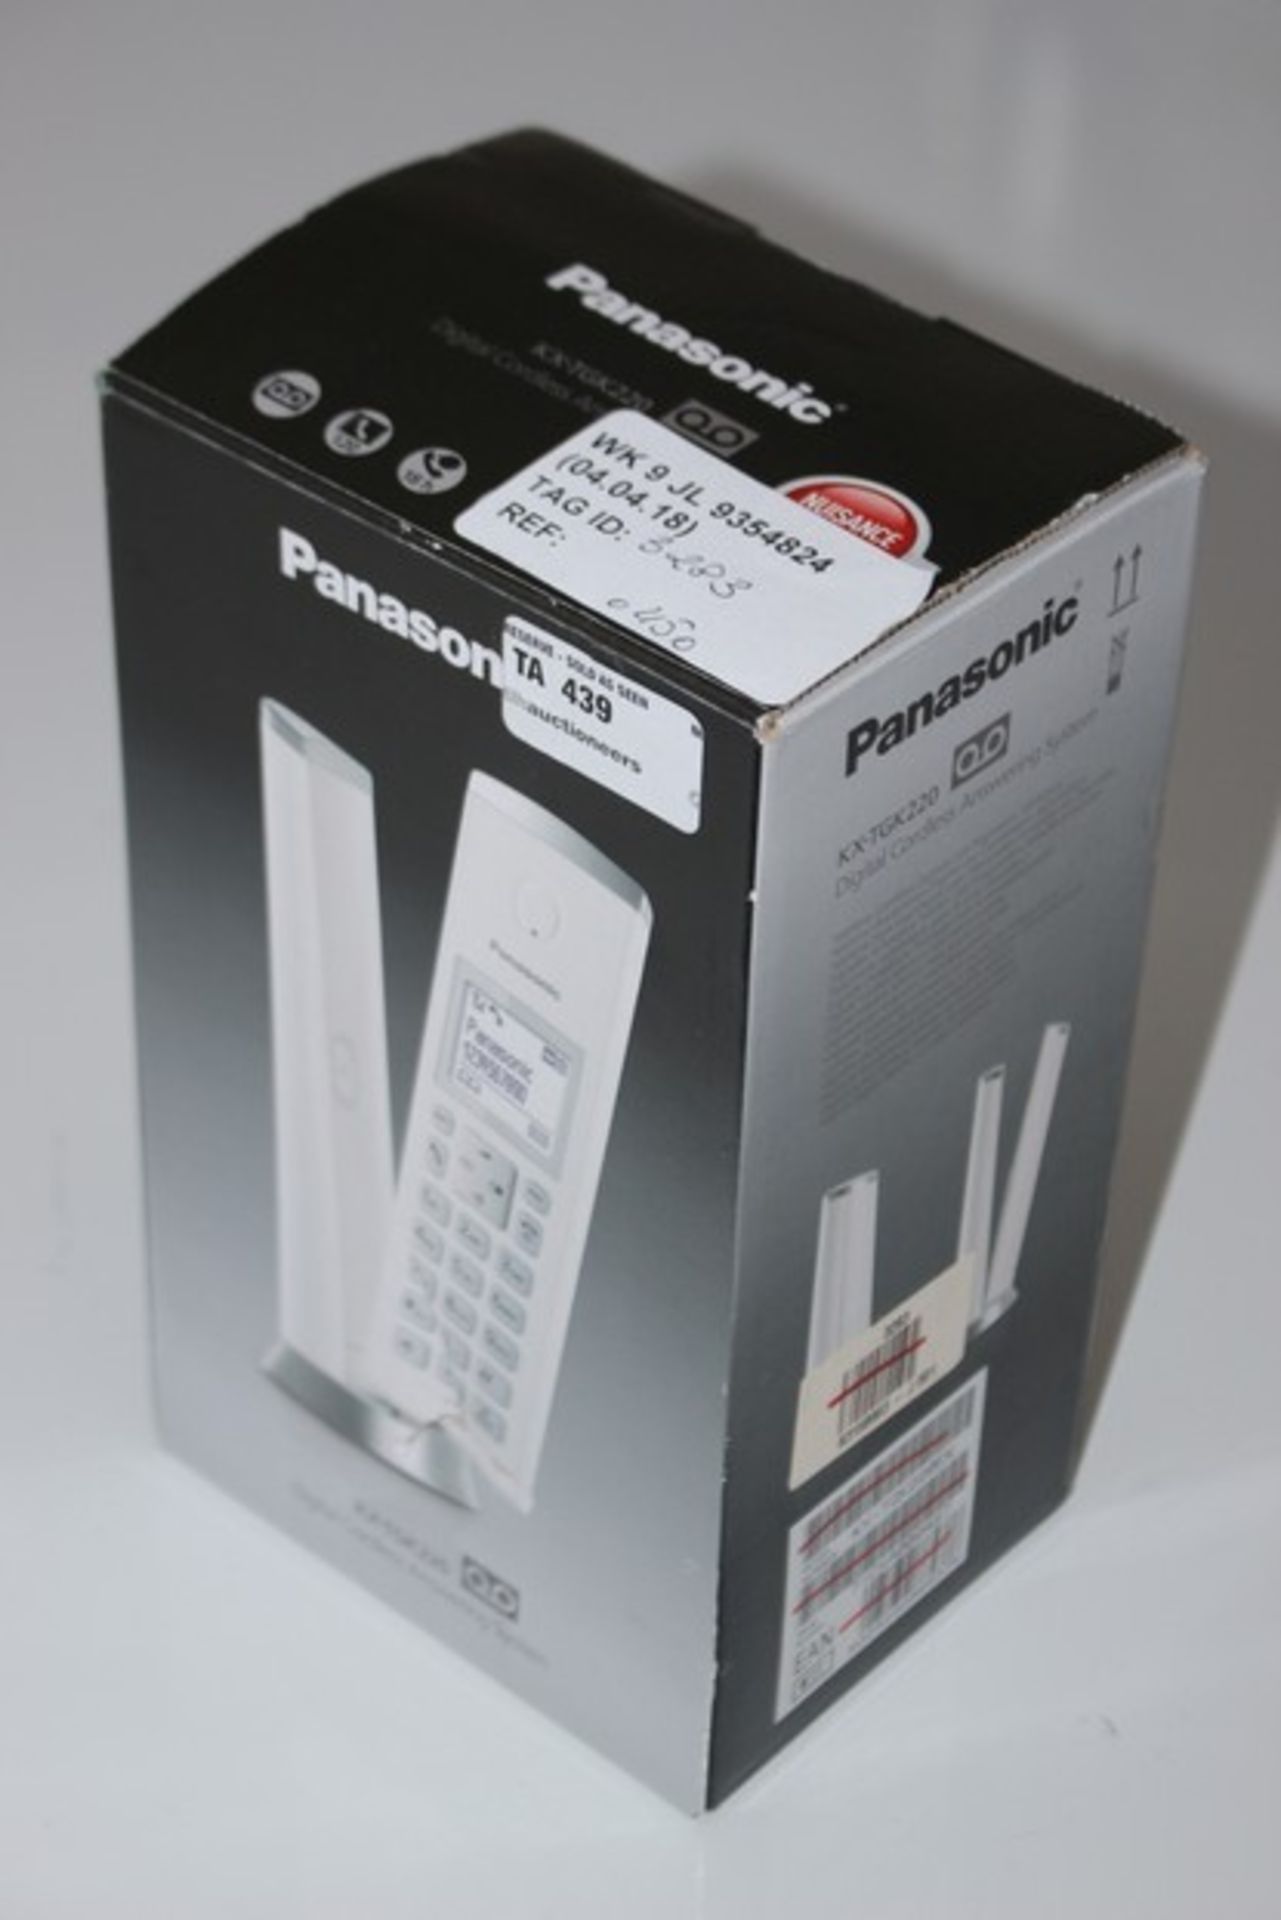 1 X PANASONIC CORDLESS DIGITAL ANSWERING SYSTEM KX-TGK220 RRP £50 (04.04.18) (3283)